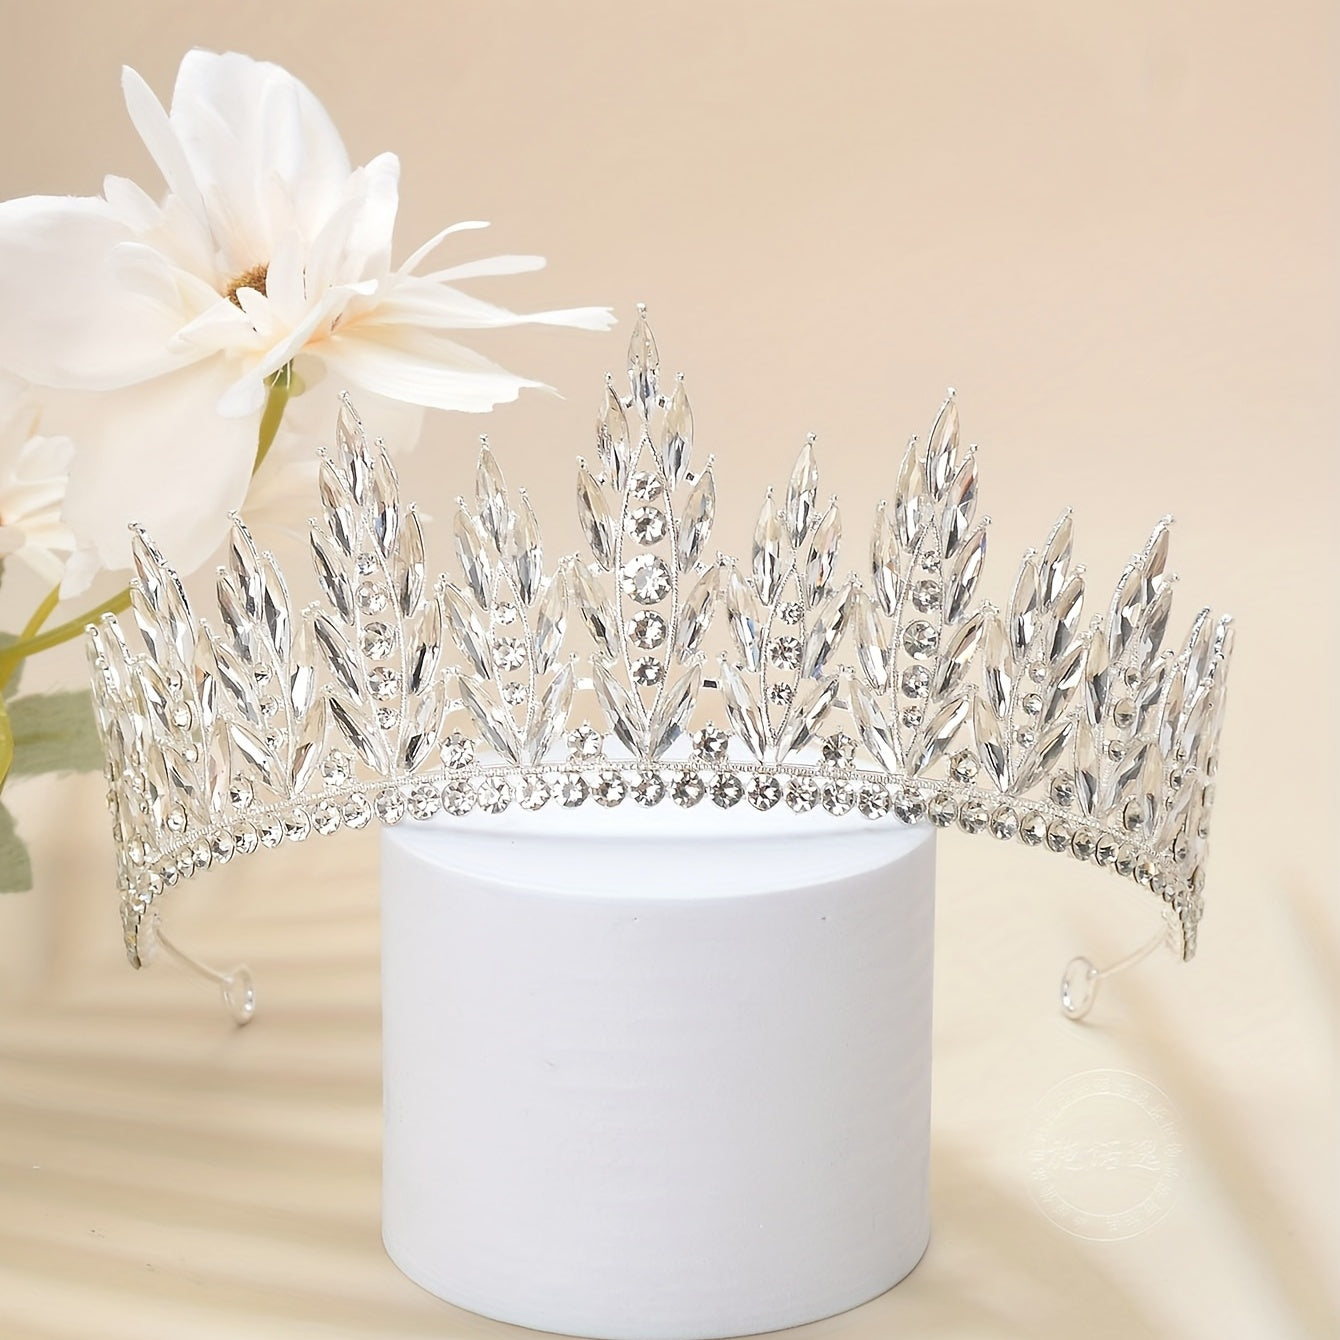 Wedding Tiara Crystal Flower Crown Glitter Headband Rhinestone Headpiece Bridal Wedding Hair Accessories For Women Girls Hair Jewelry For Party Prom